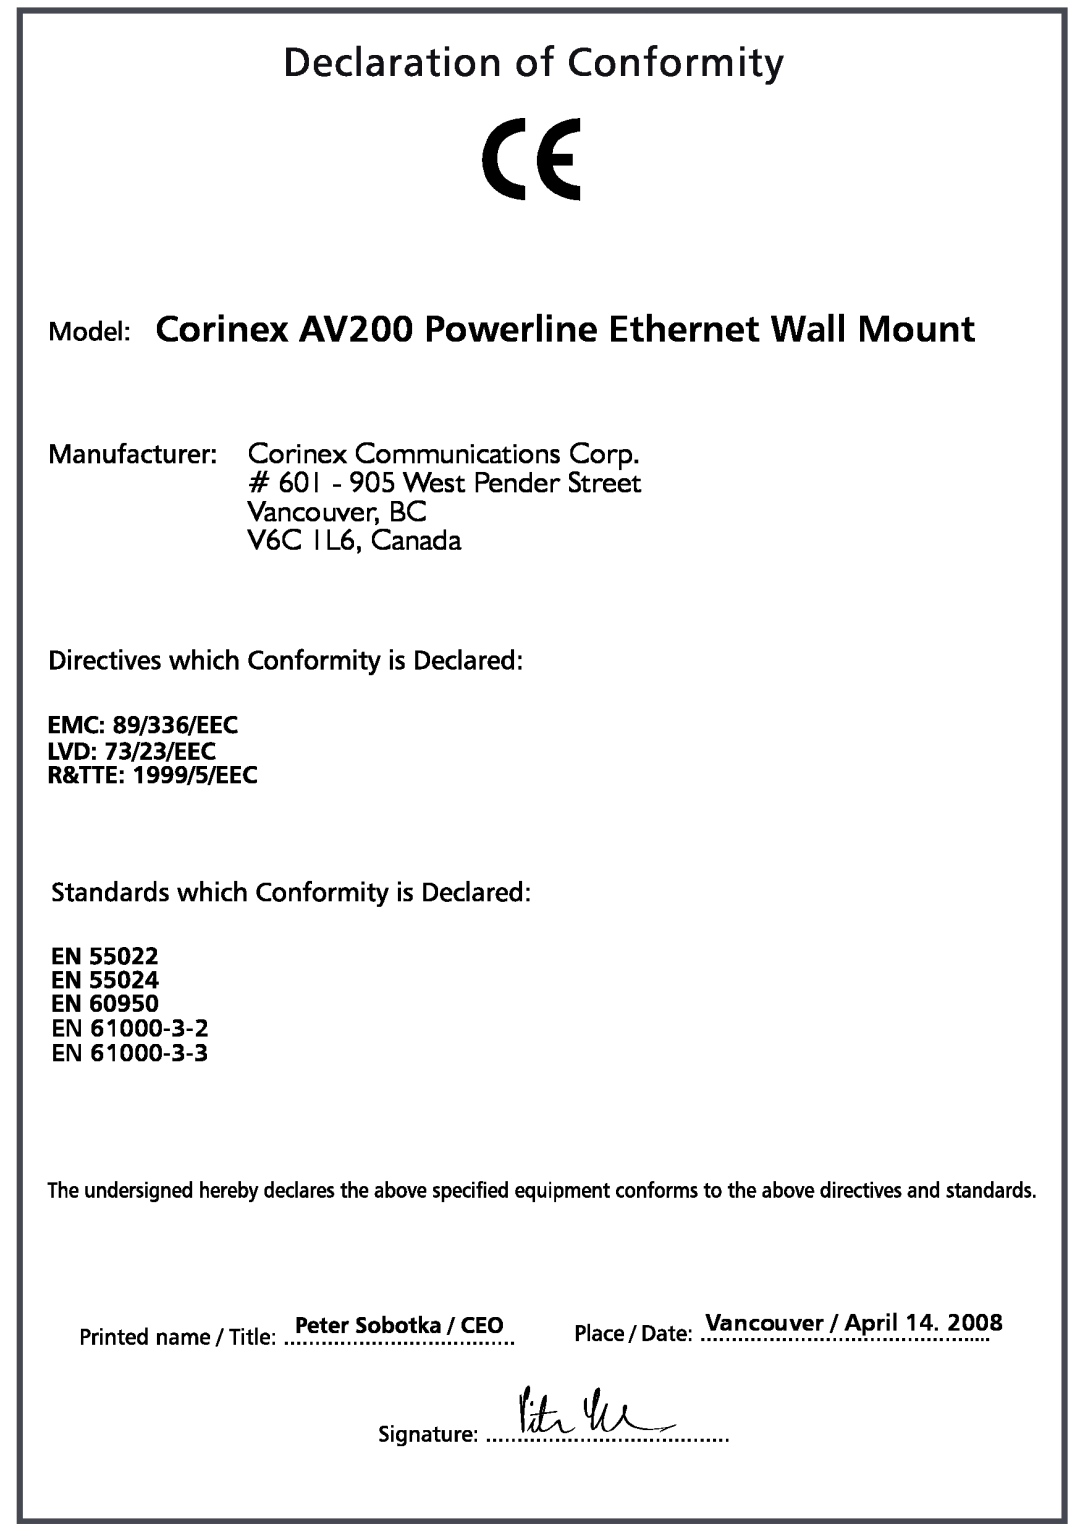 DeWalt En En, Corinex AV200 Powerline Ethernet Wall Mount, Corinex Communications Corp # 601 - 905 West Pender Street 